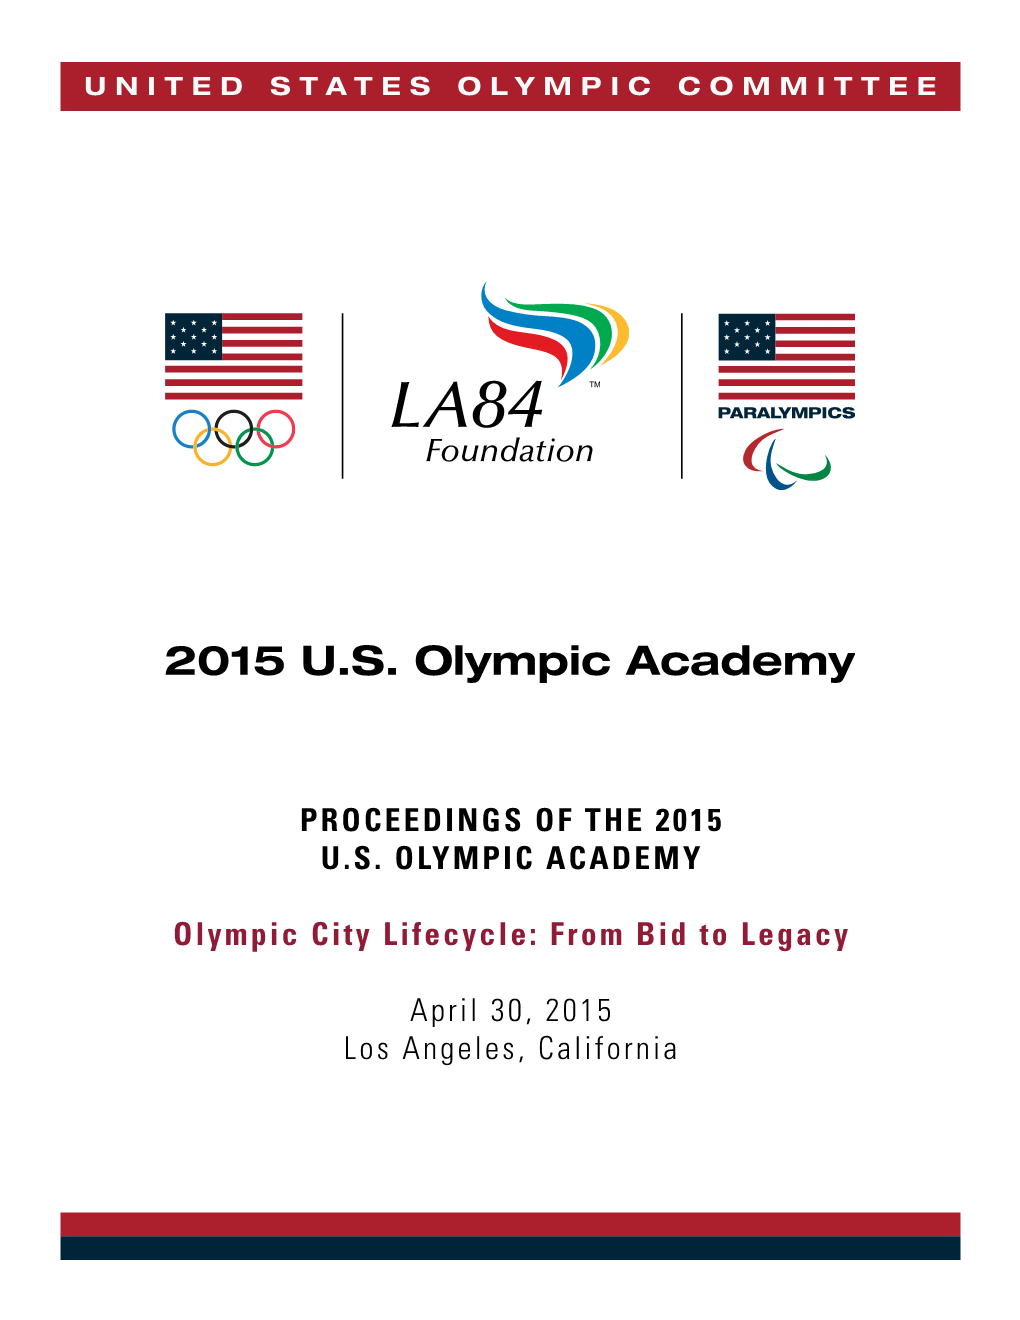 2014 U.S. Olympic Academy. Proceedings of the 2015 U.S